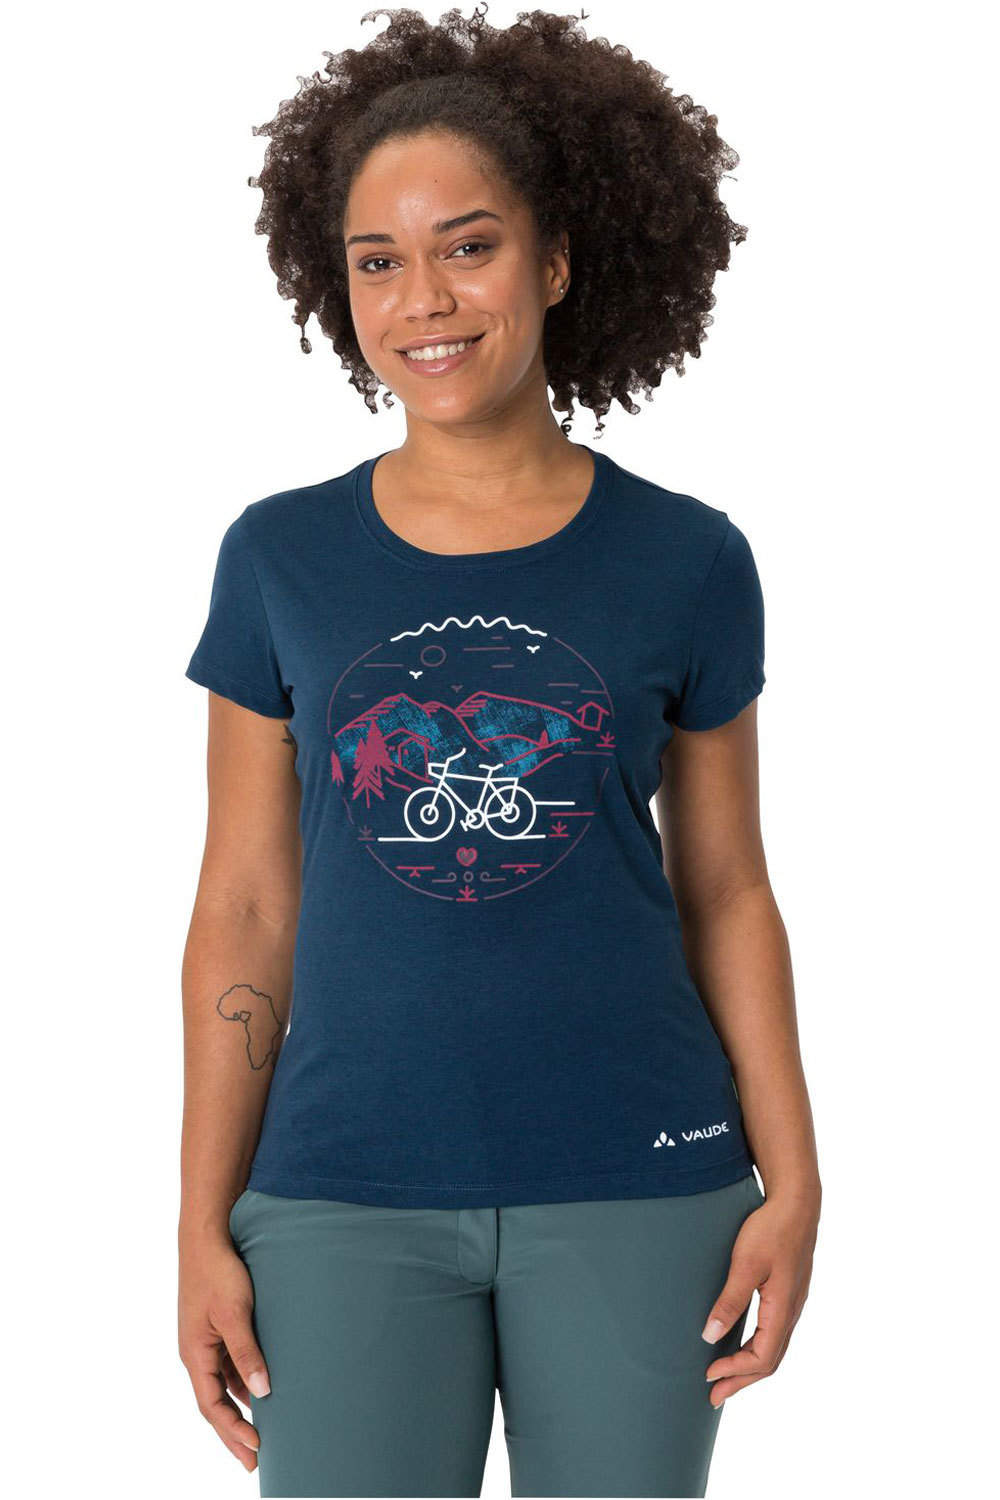 Vaude camiseta montaña manga corta mujer Women  s Cyclist T-Shirt V vista frontal